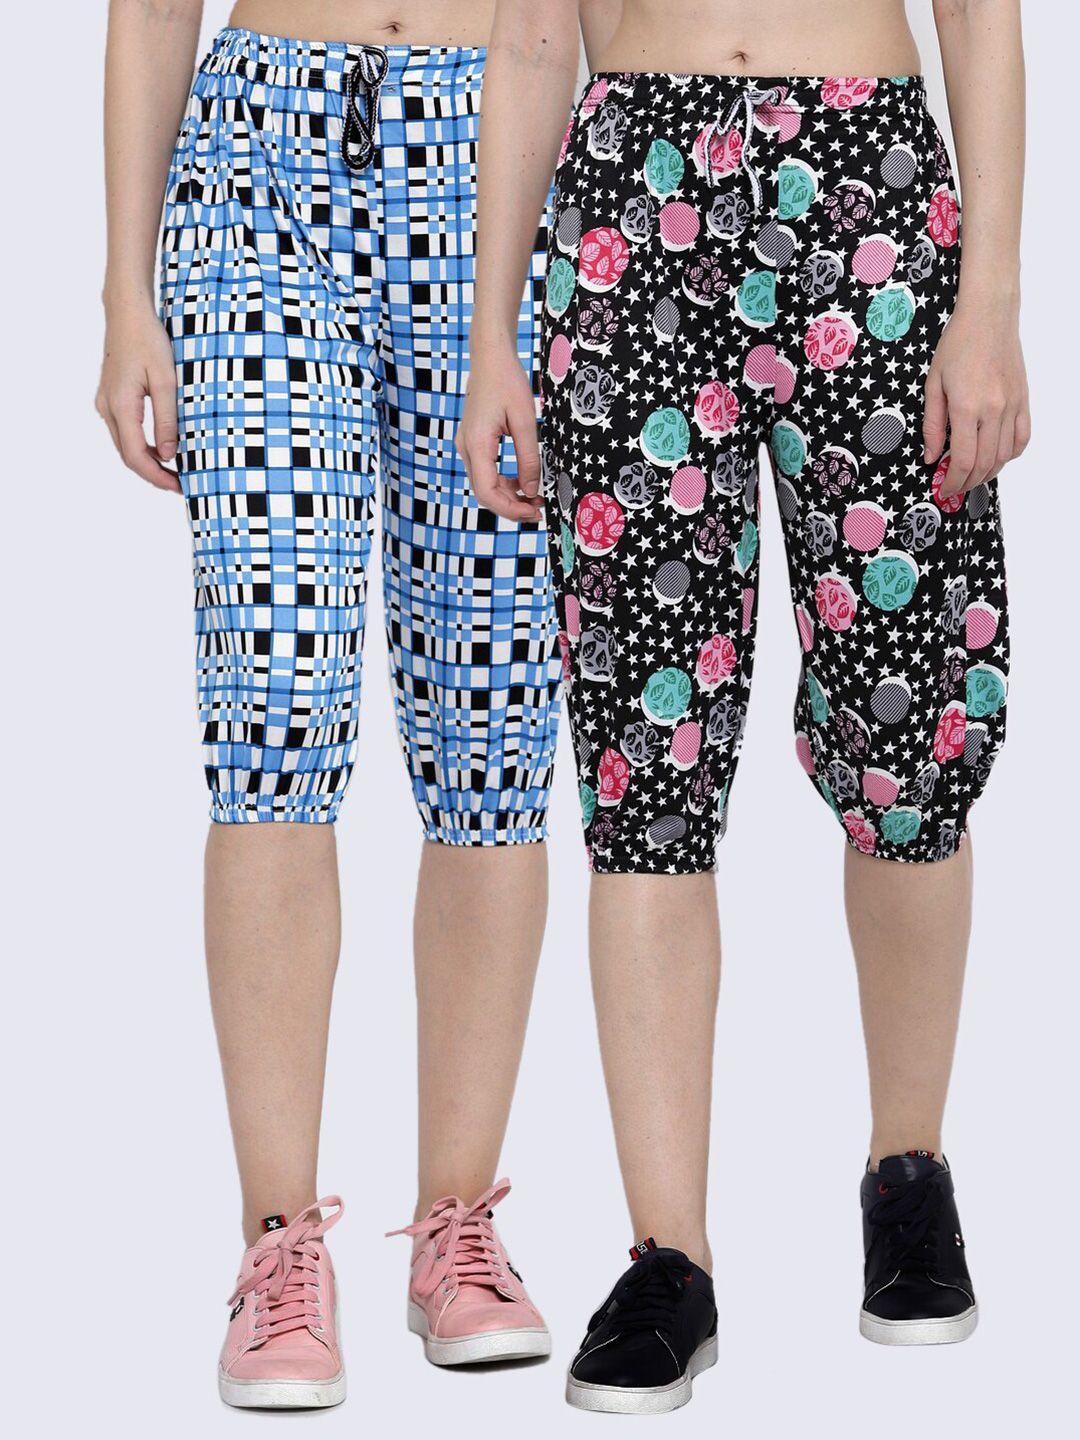 klotthe women pack of 2 geometric printed capris